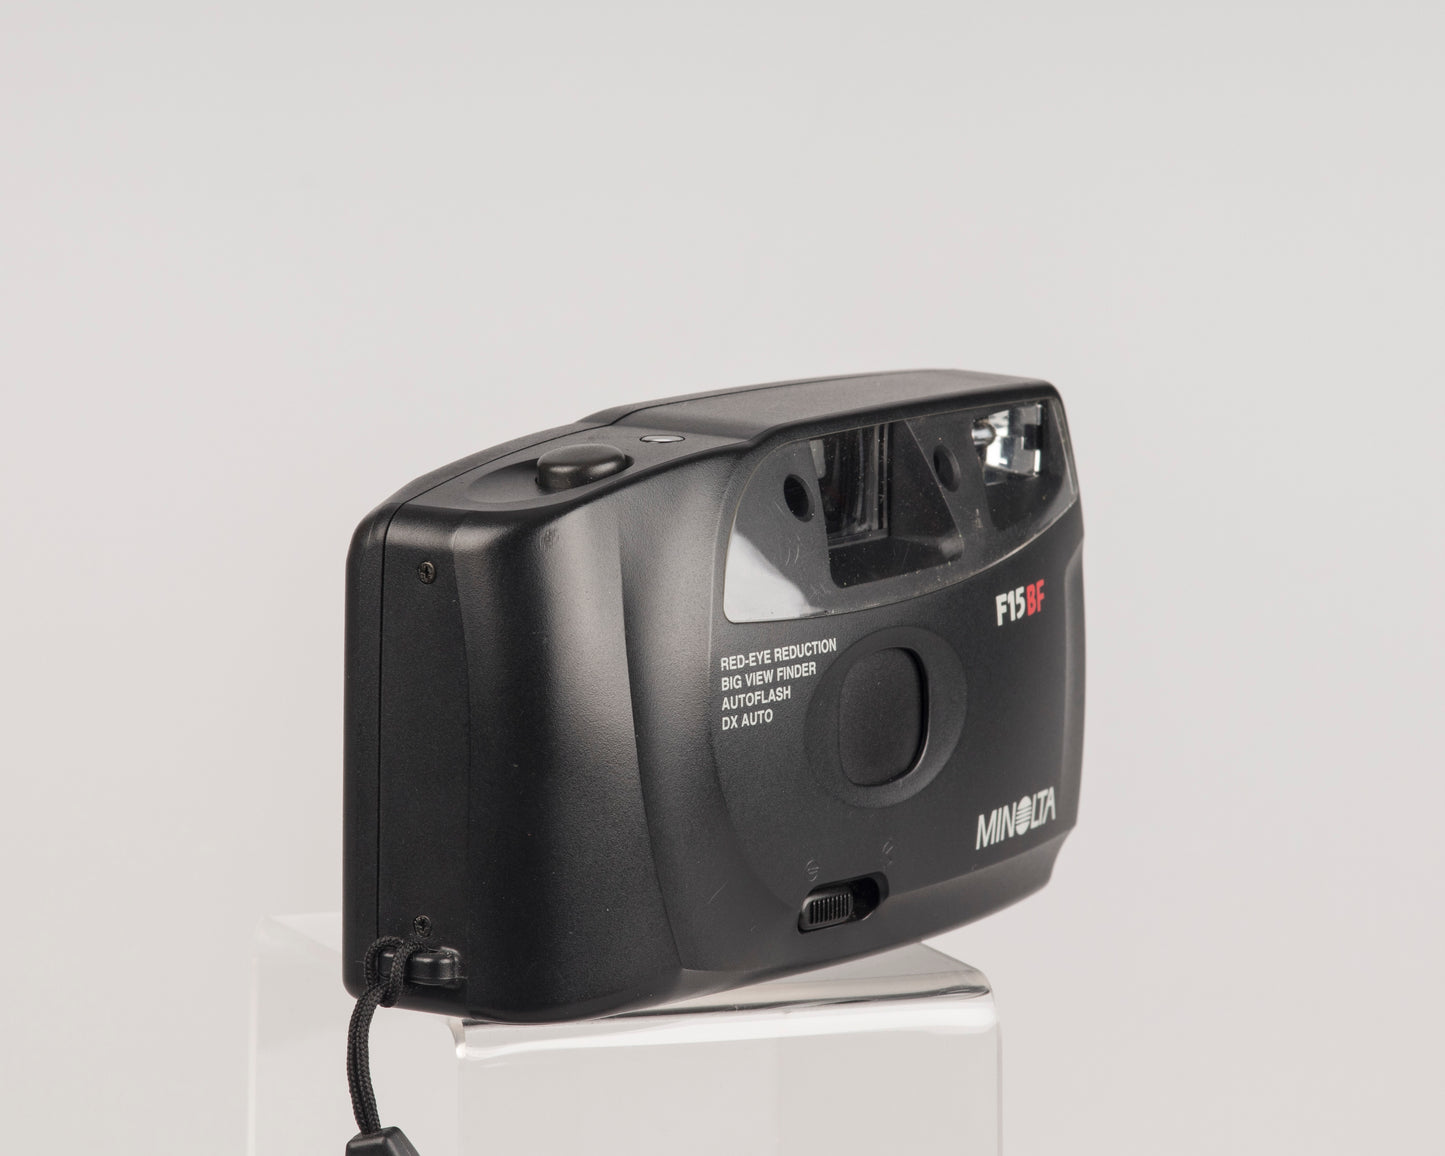 Minolta F15BF 35mm film camera